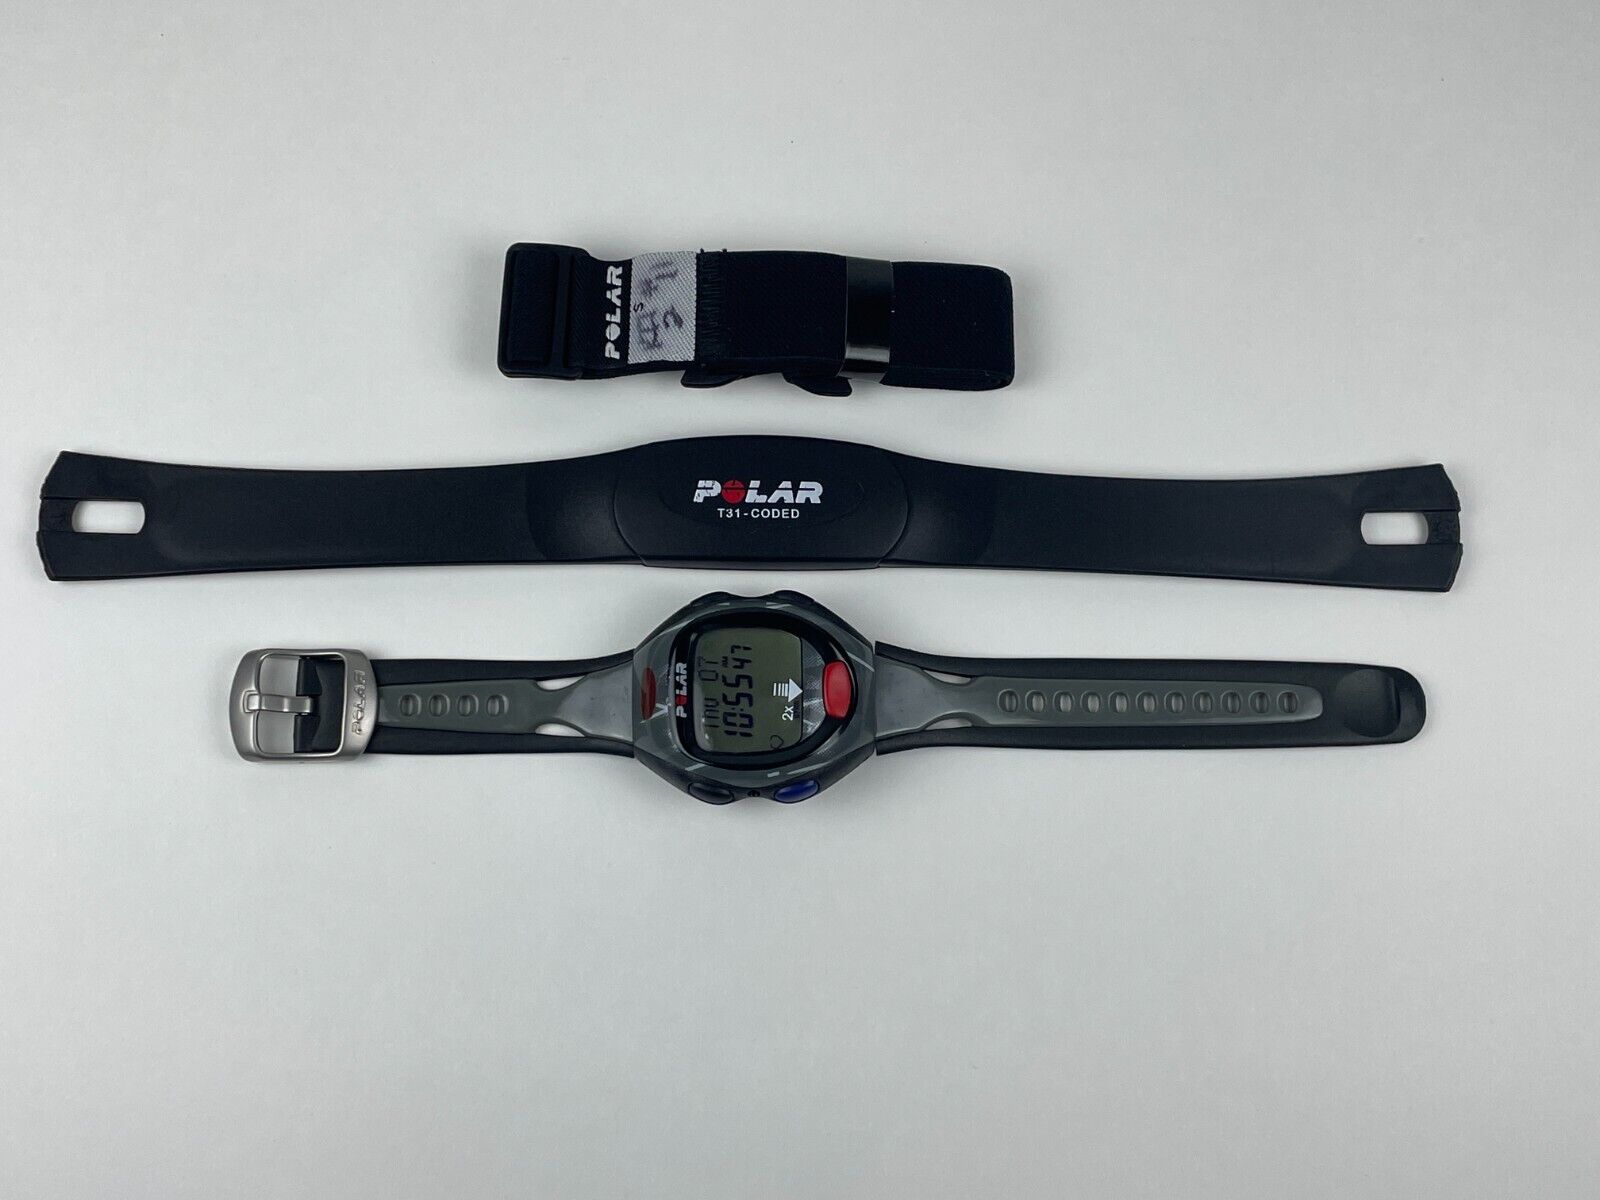 Polar T31 HR Monitor & E600 Watch+ Chest Strap